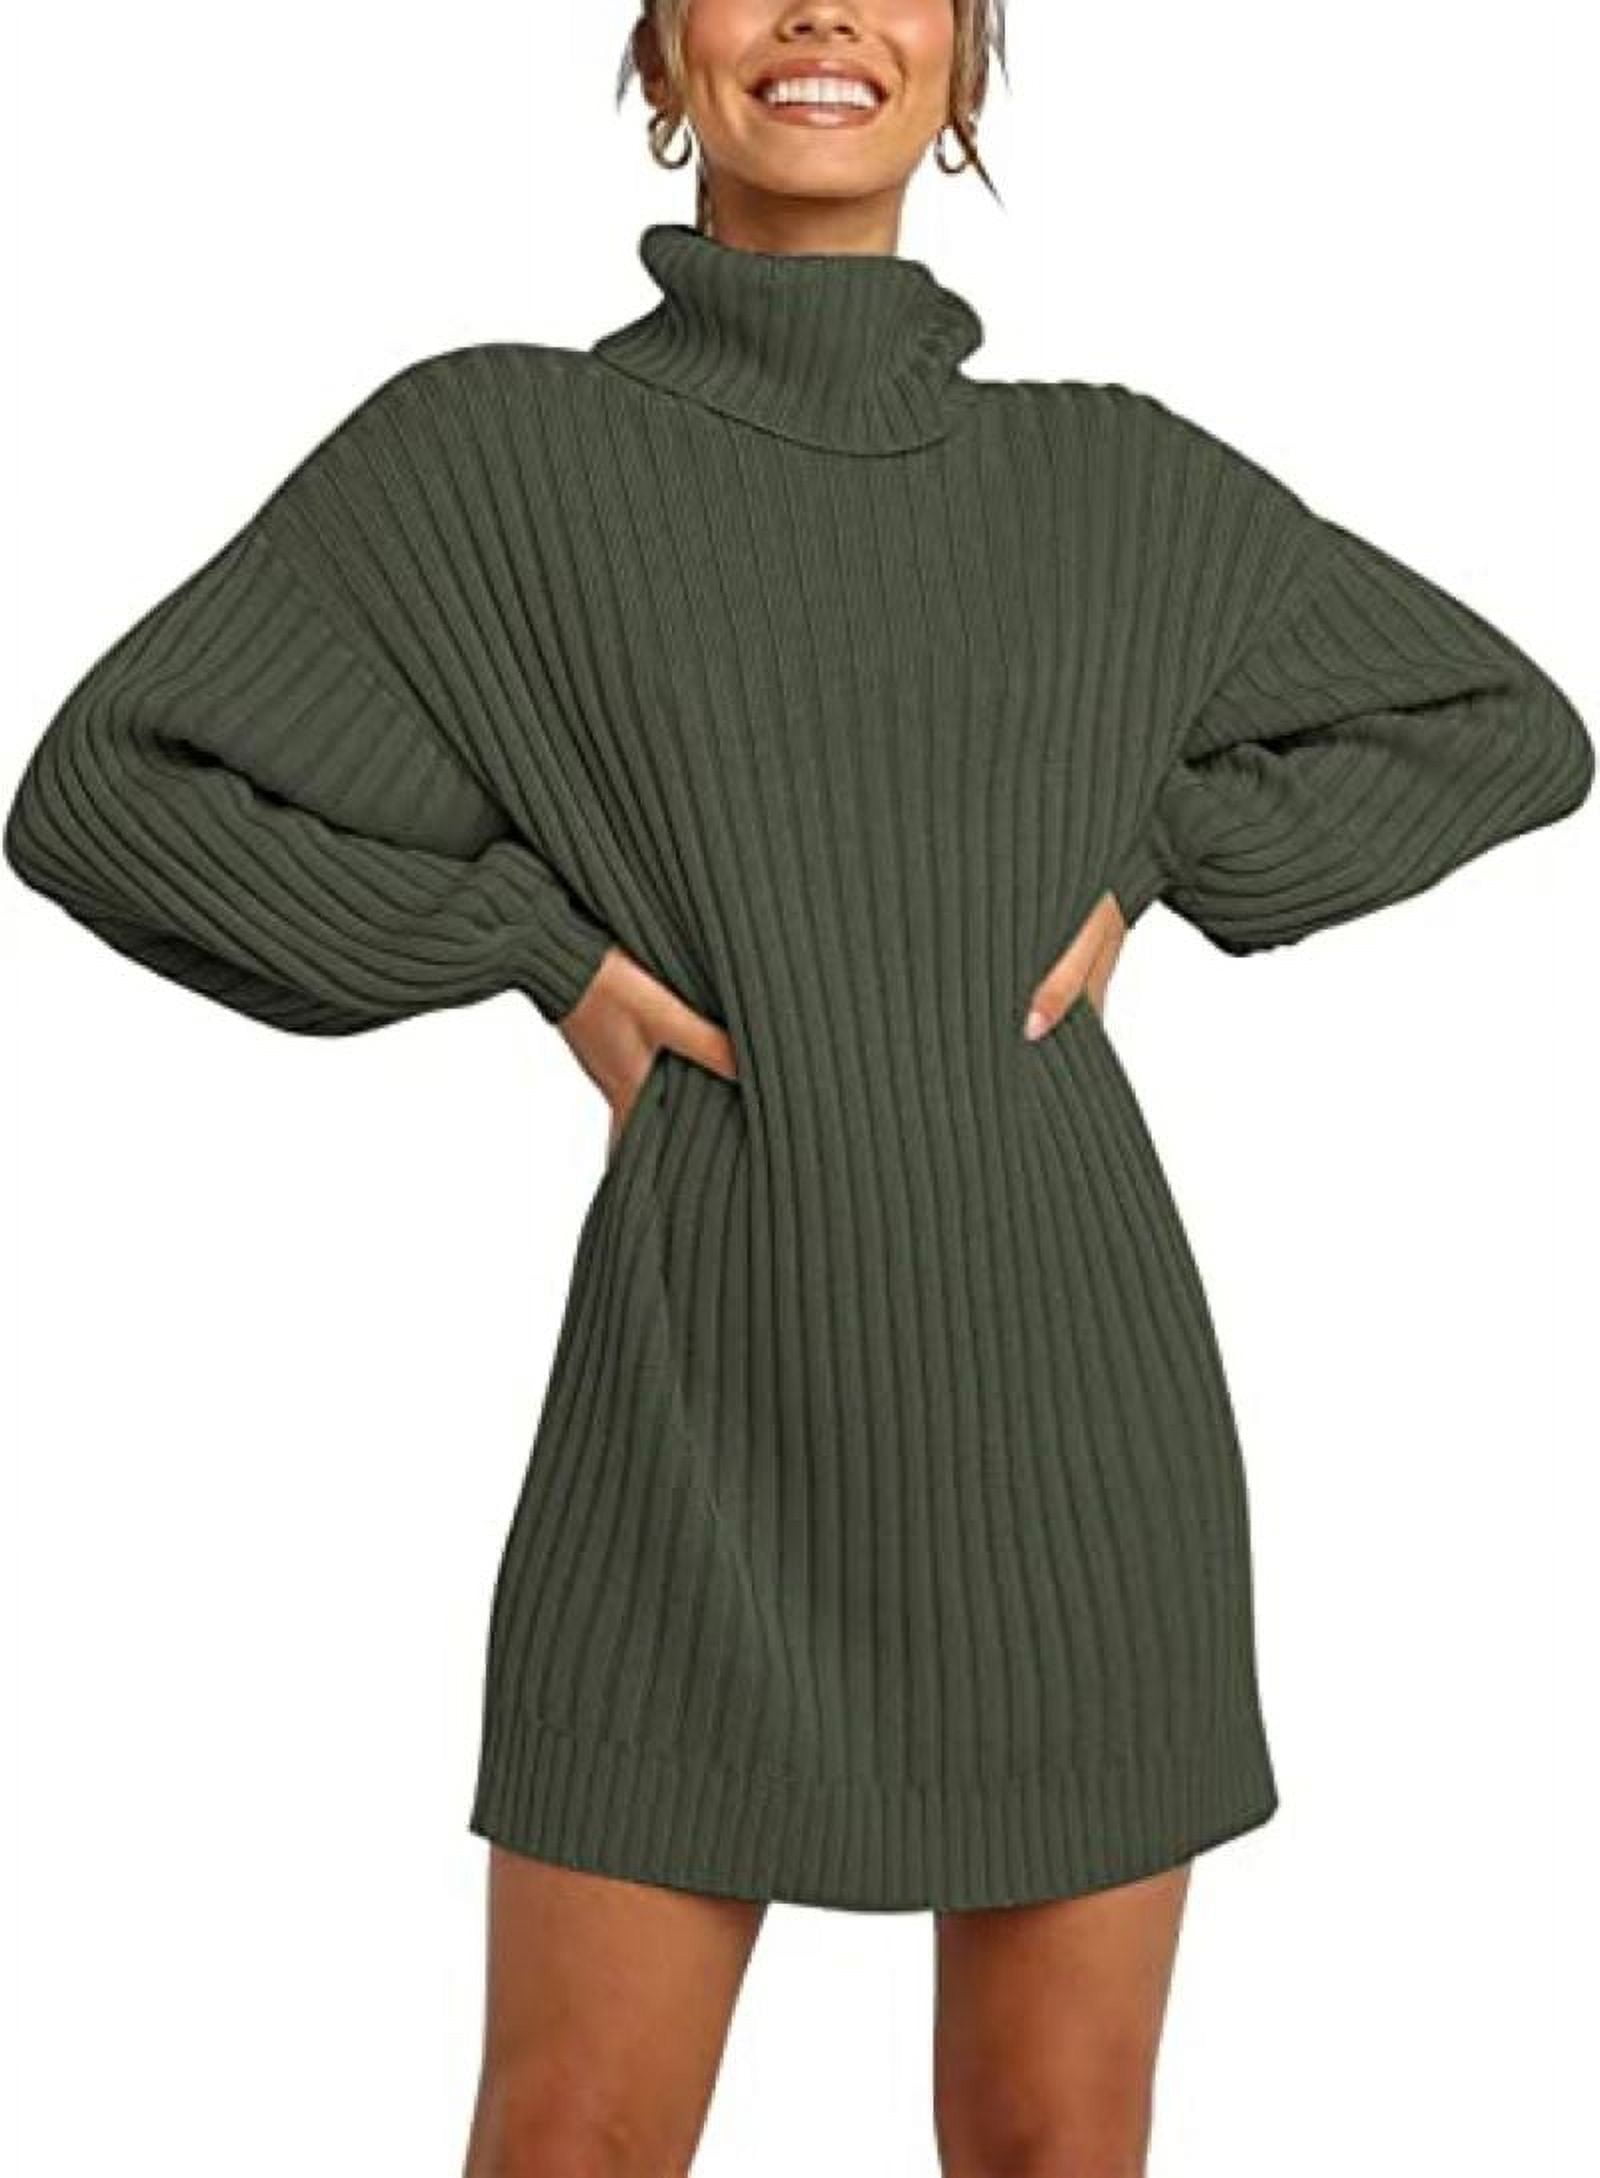  MIYYO Winter Knit Dress Women's Turtleneck Long Sleeve